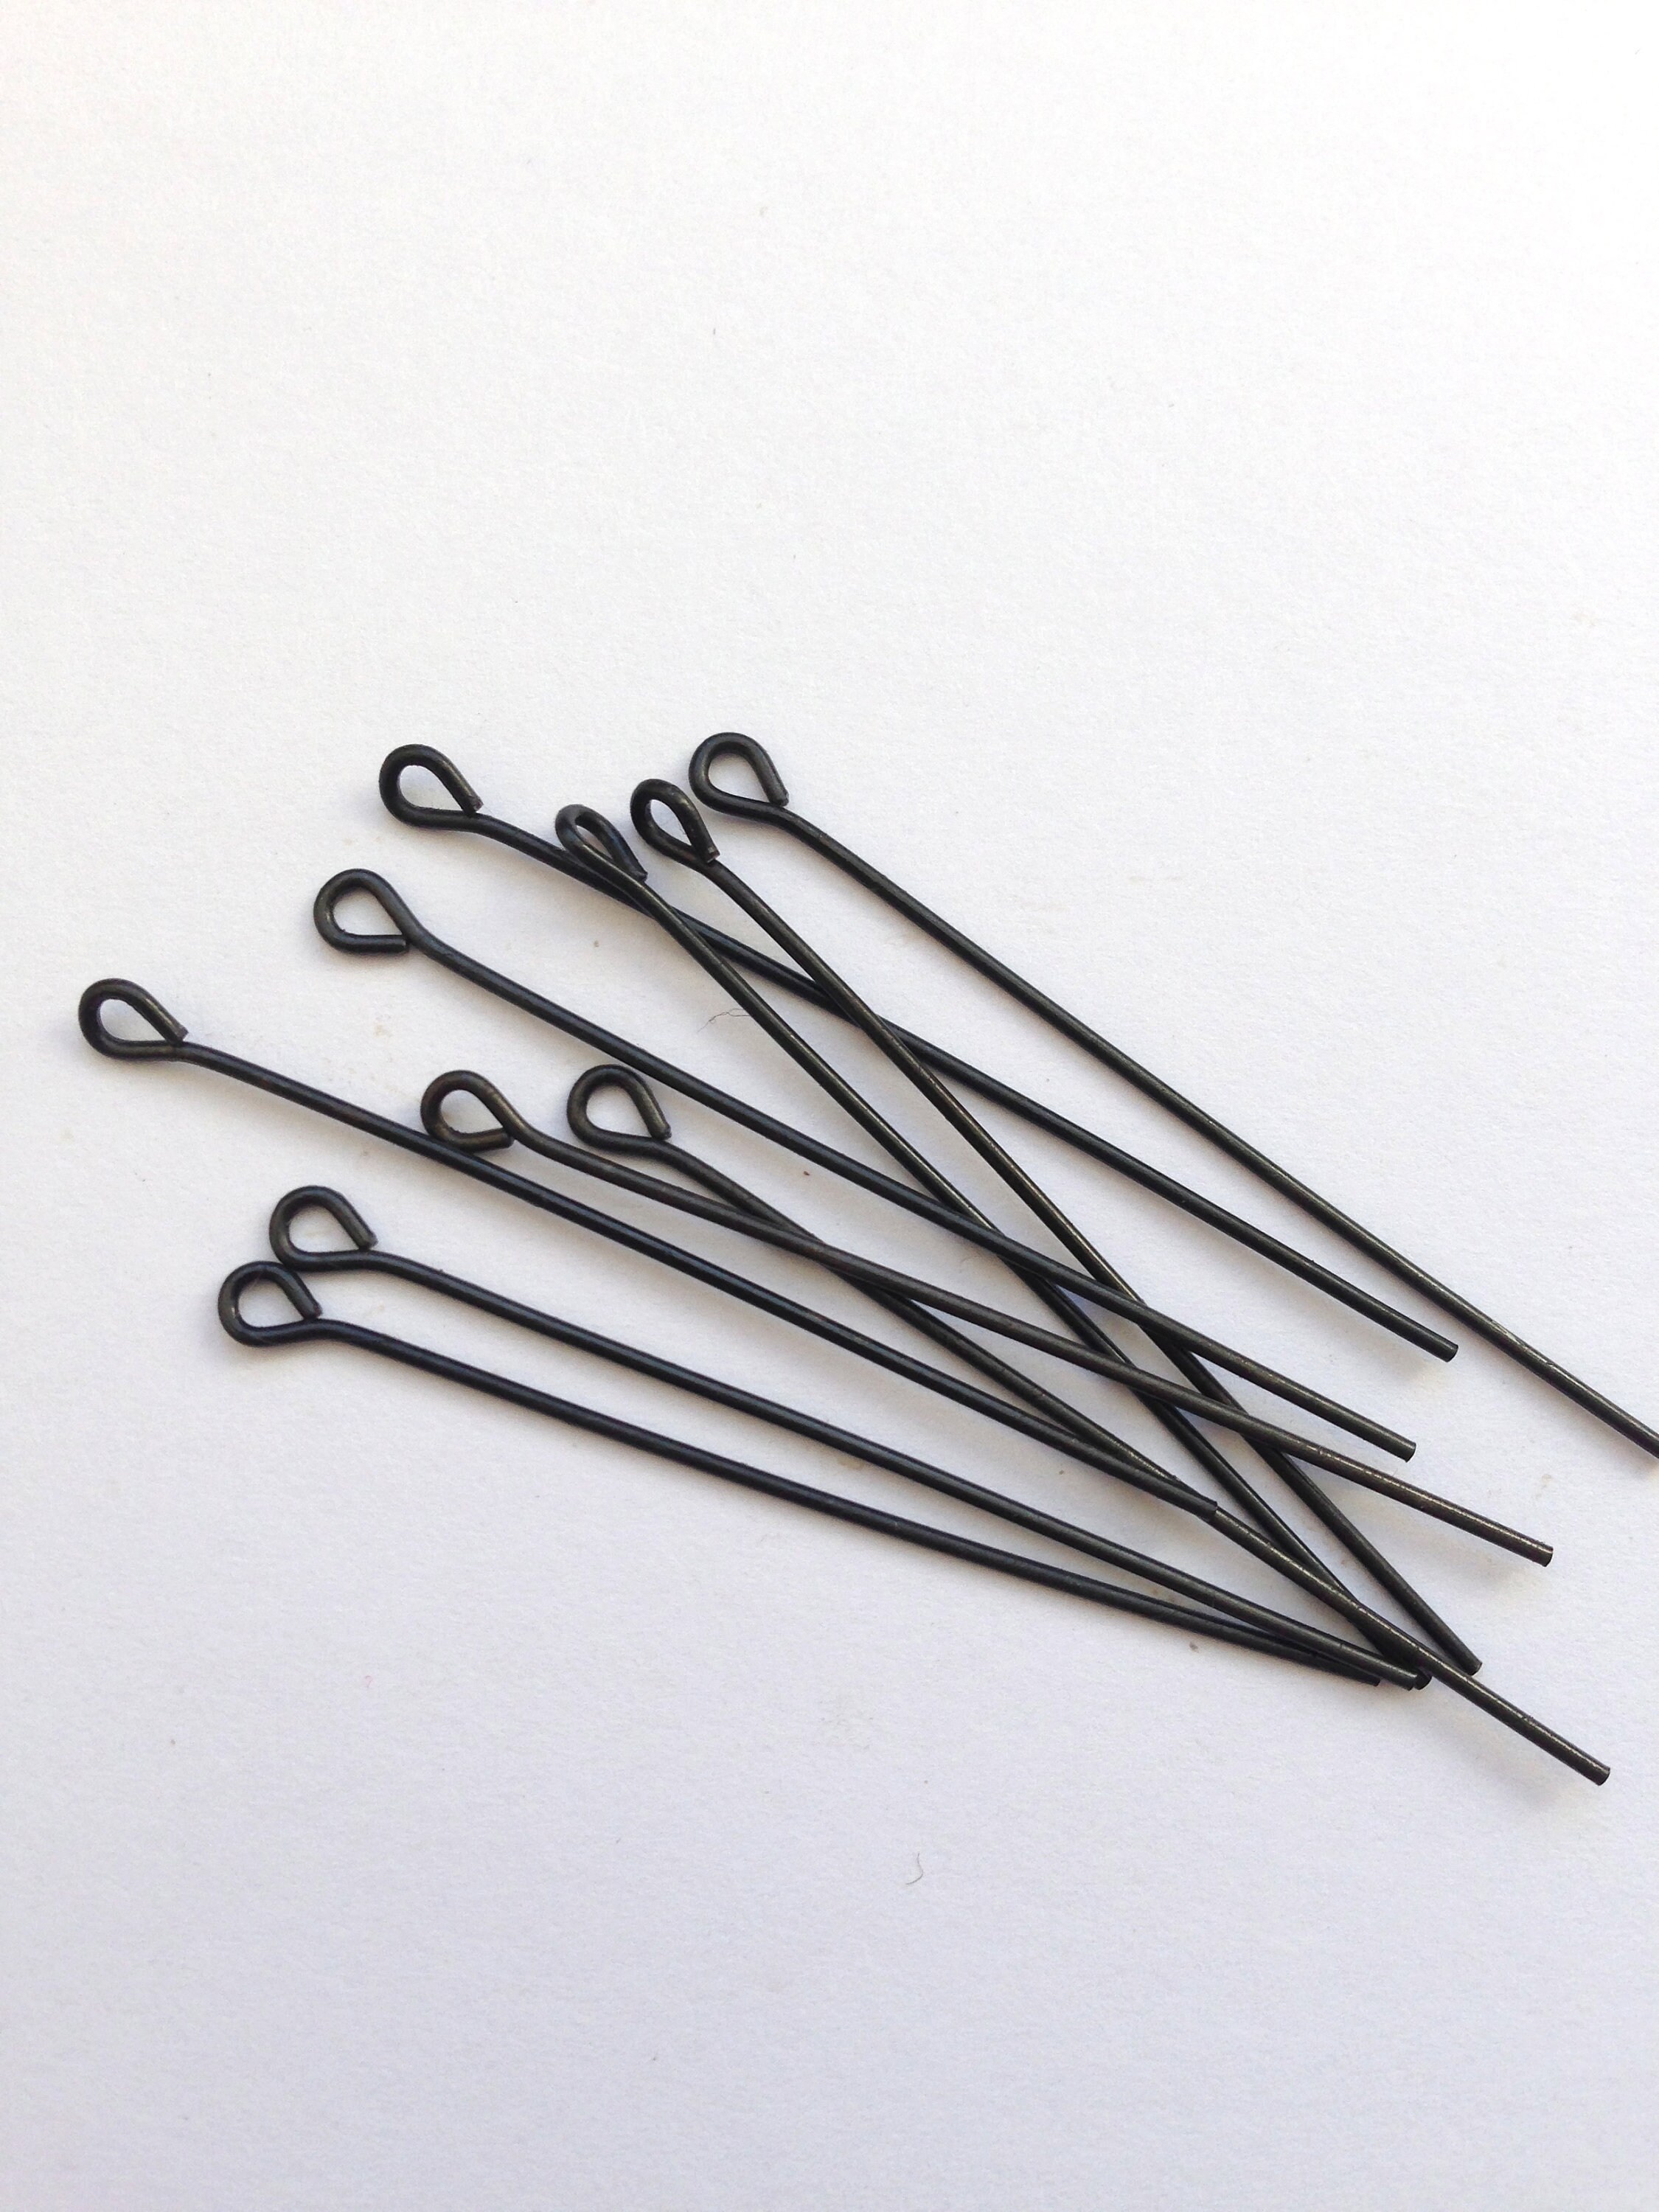 250pc Small Raw Brass Eye Pin 16mm Length, 21ga Wire Eyepins for